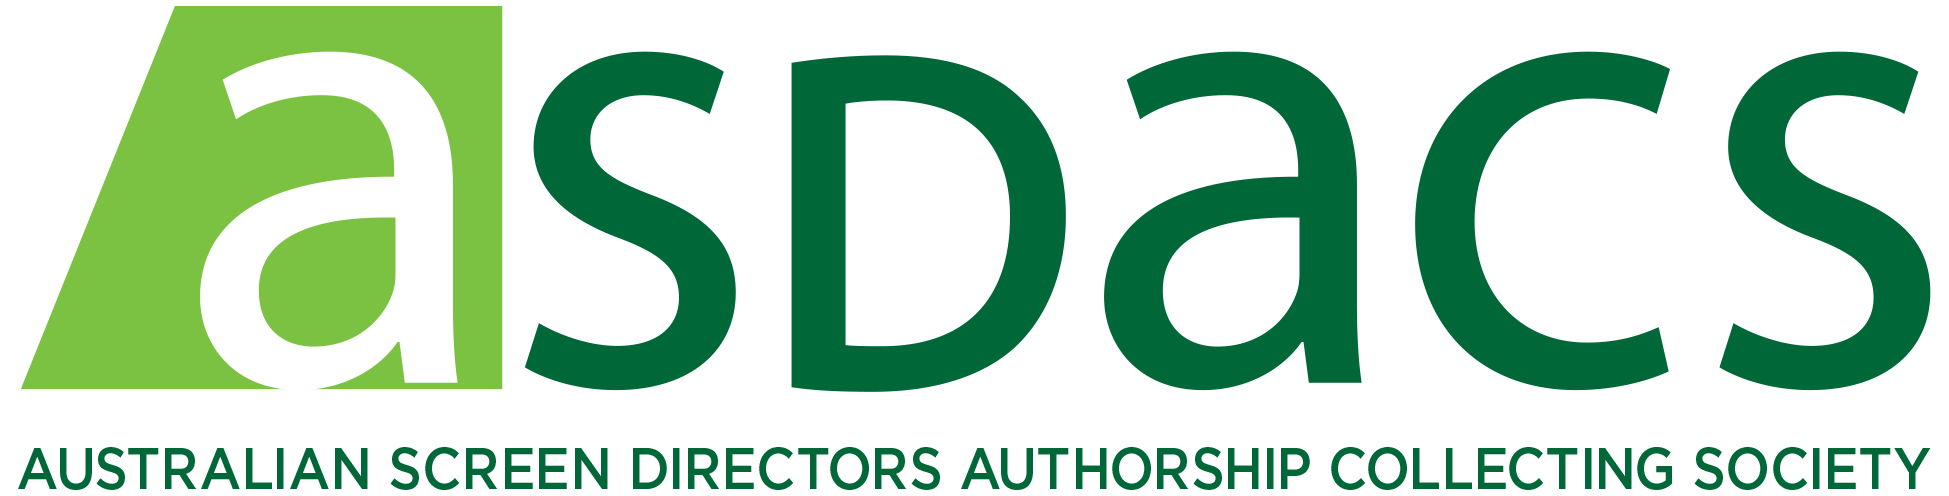 ASDACS - Australian Screen Directors Authorship Collecting Society